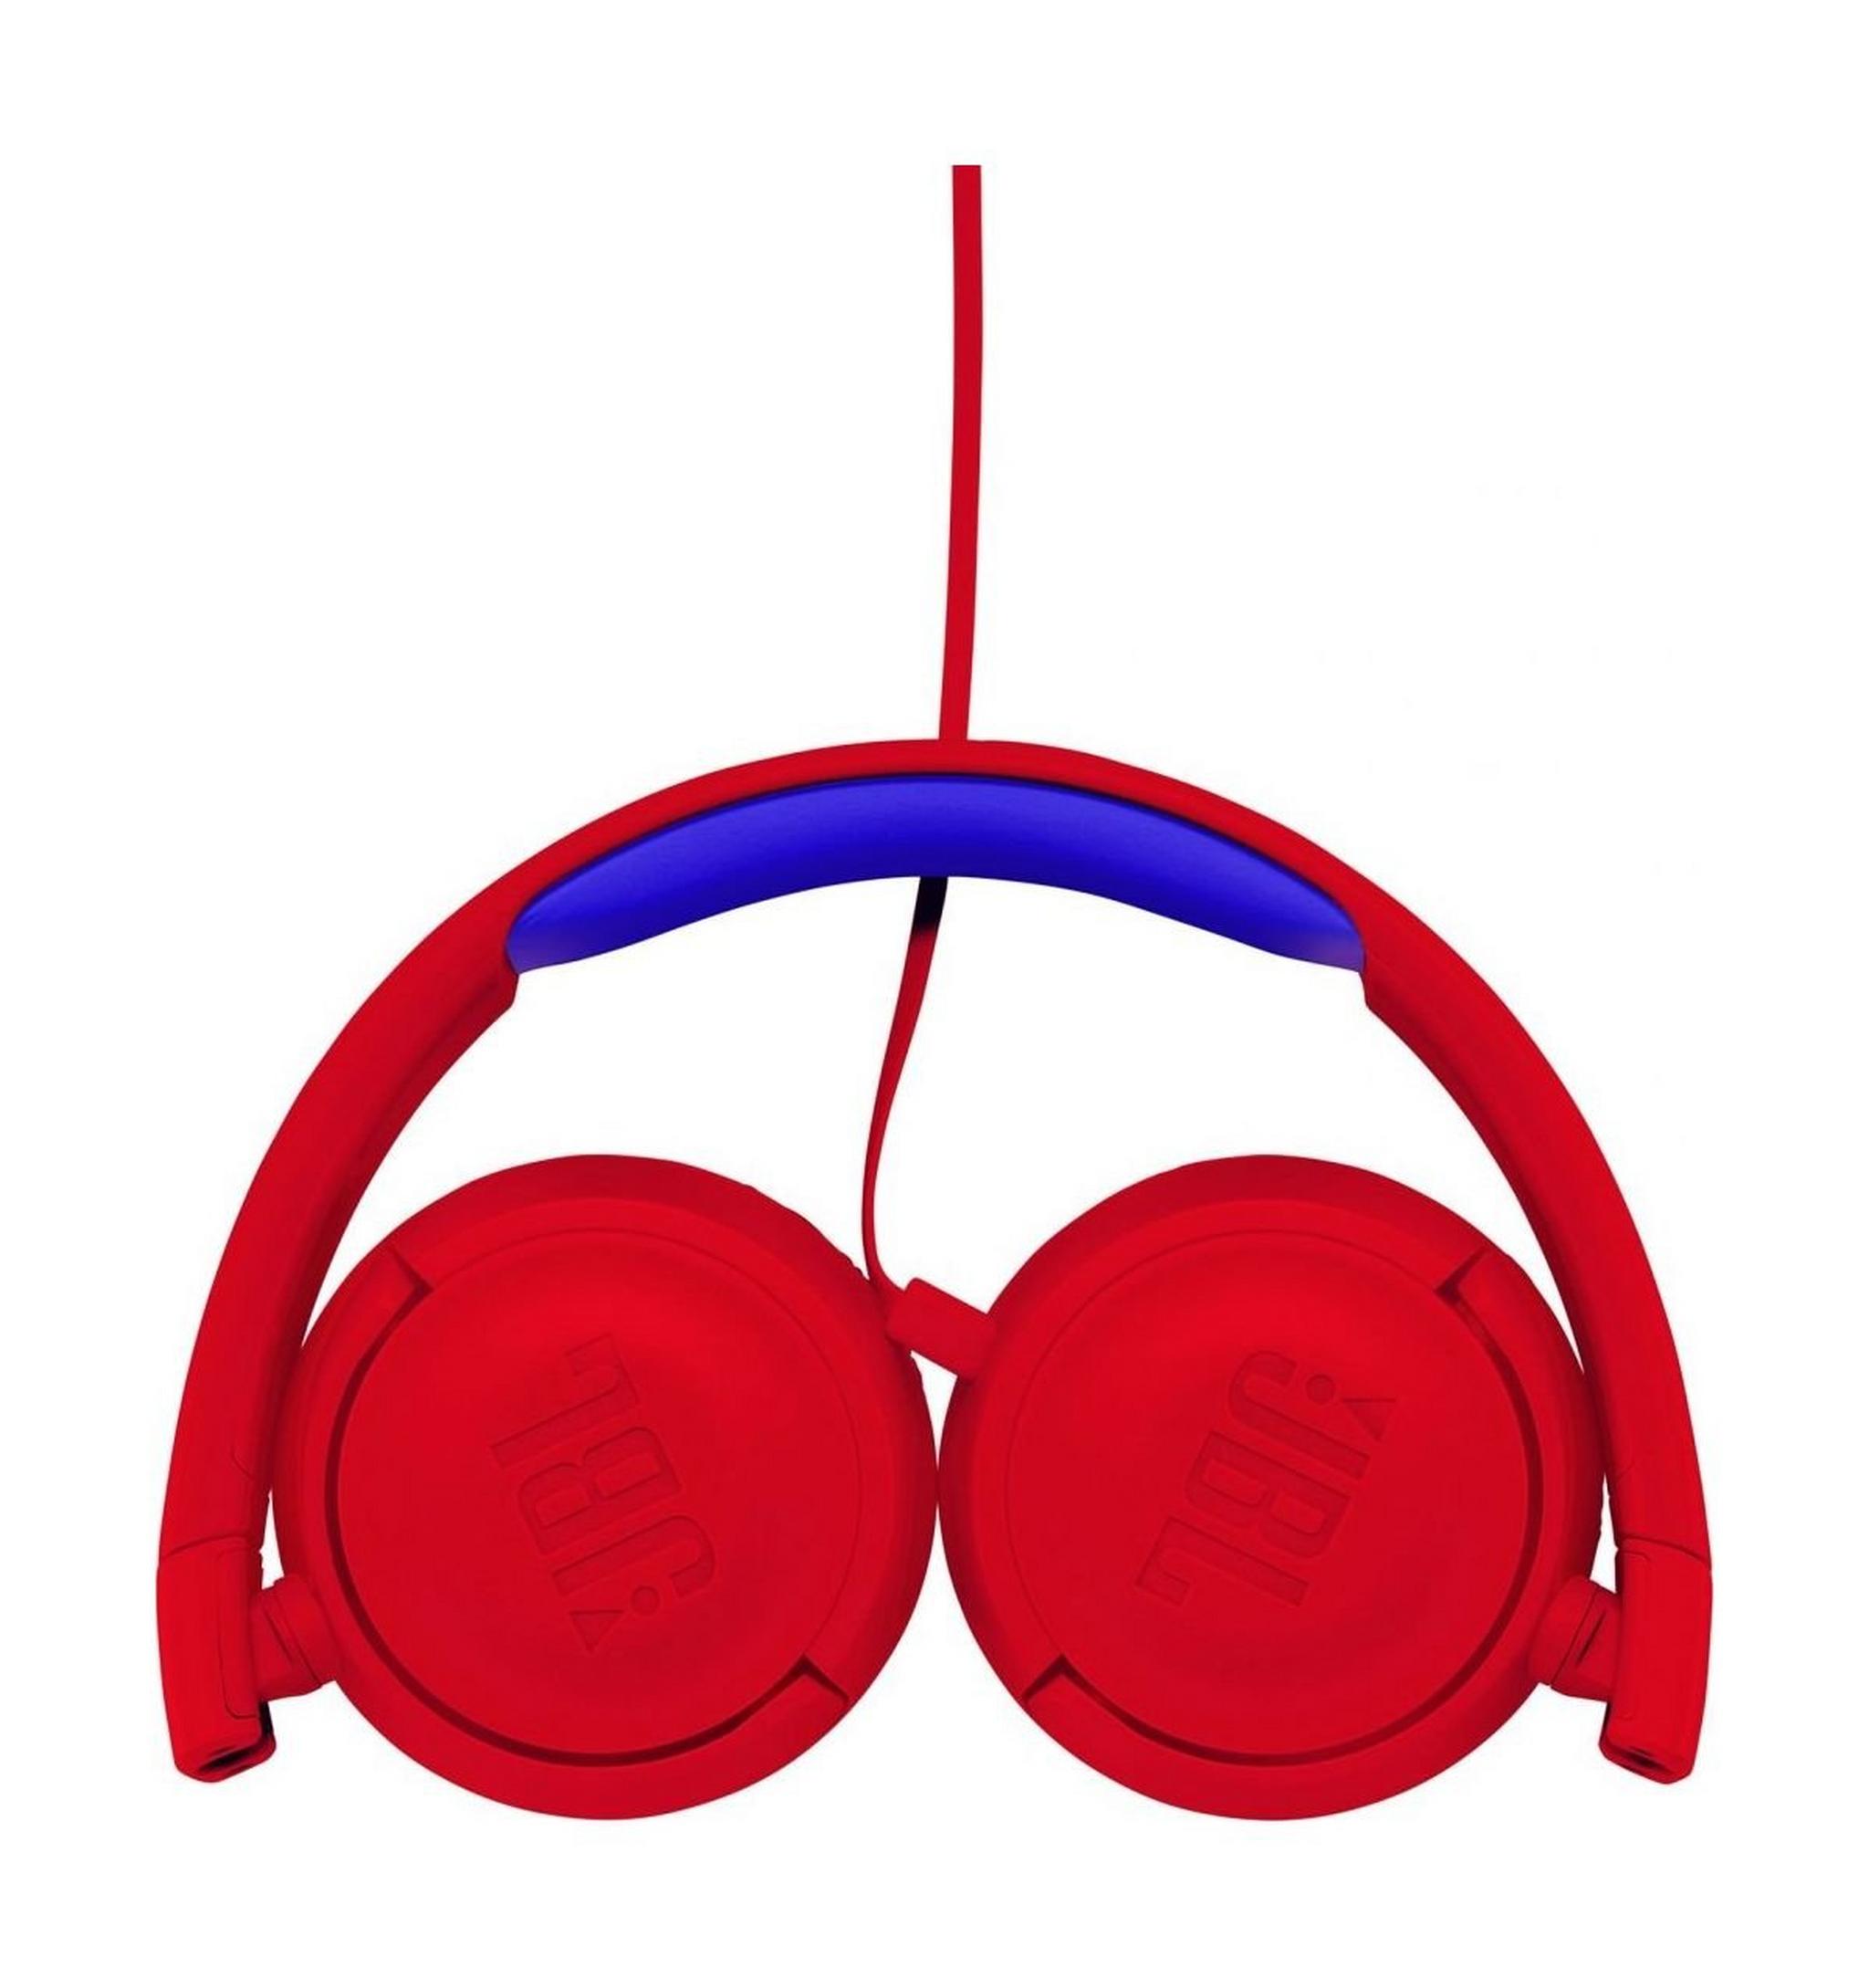 JBL Kids On-Ear Headphone (JBLJR300) - Red